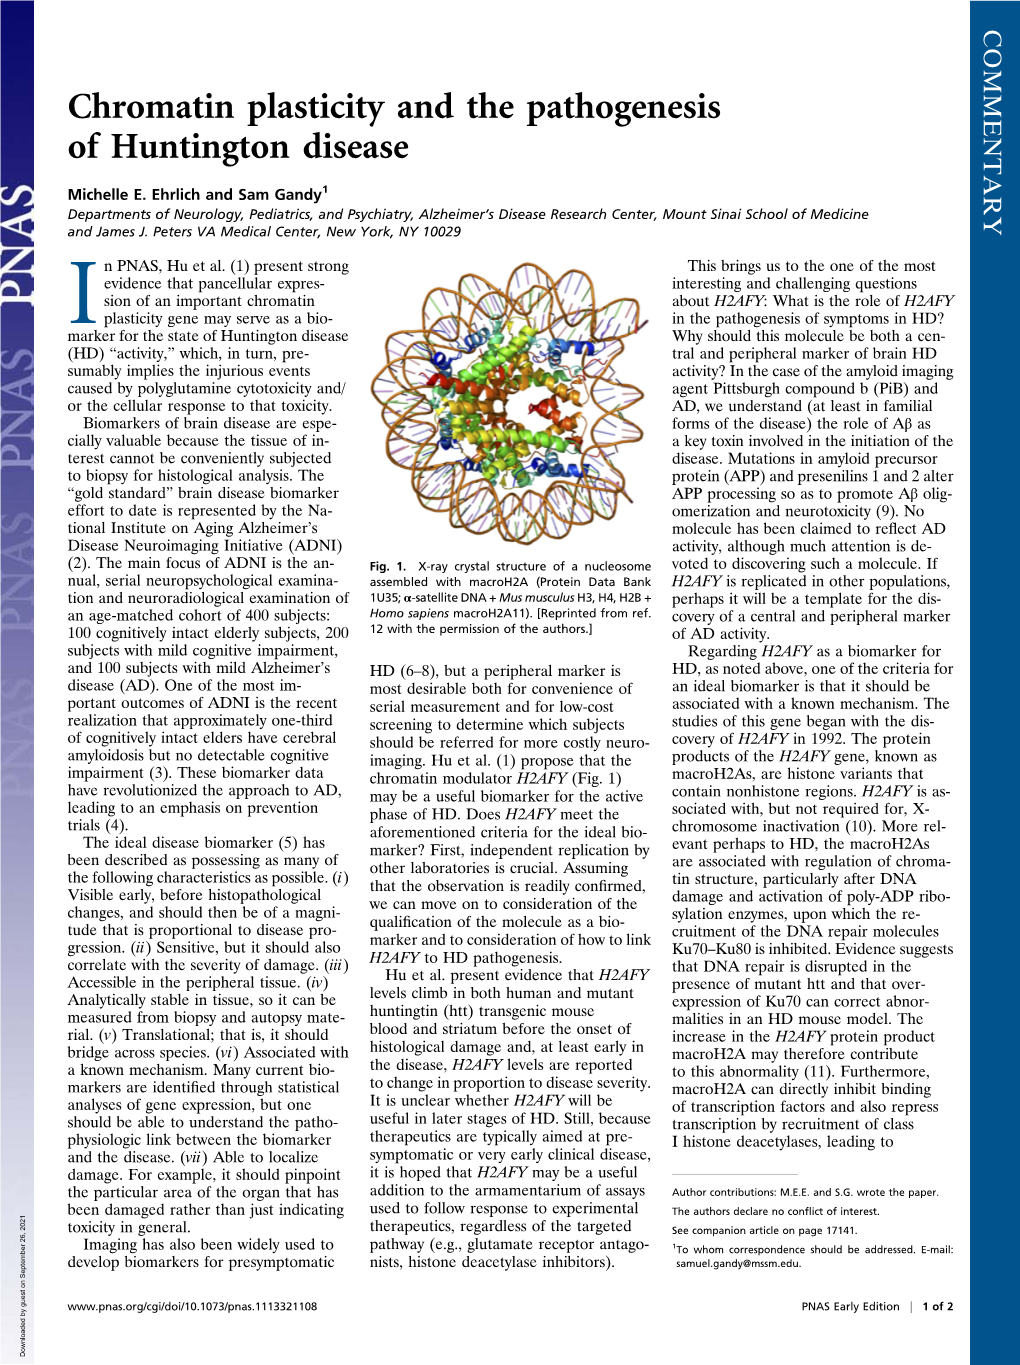 Chromatin Plasticity and the Pathogenesis of Huntington Disease